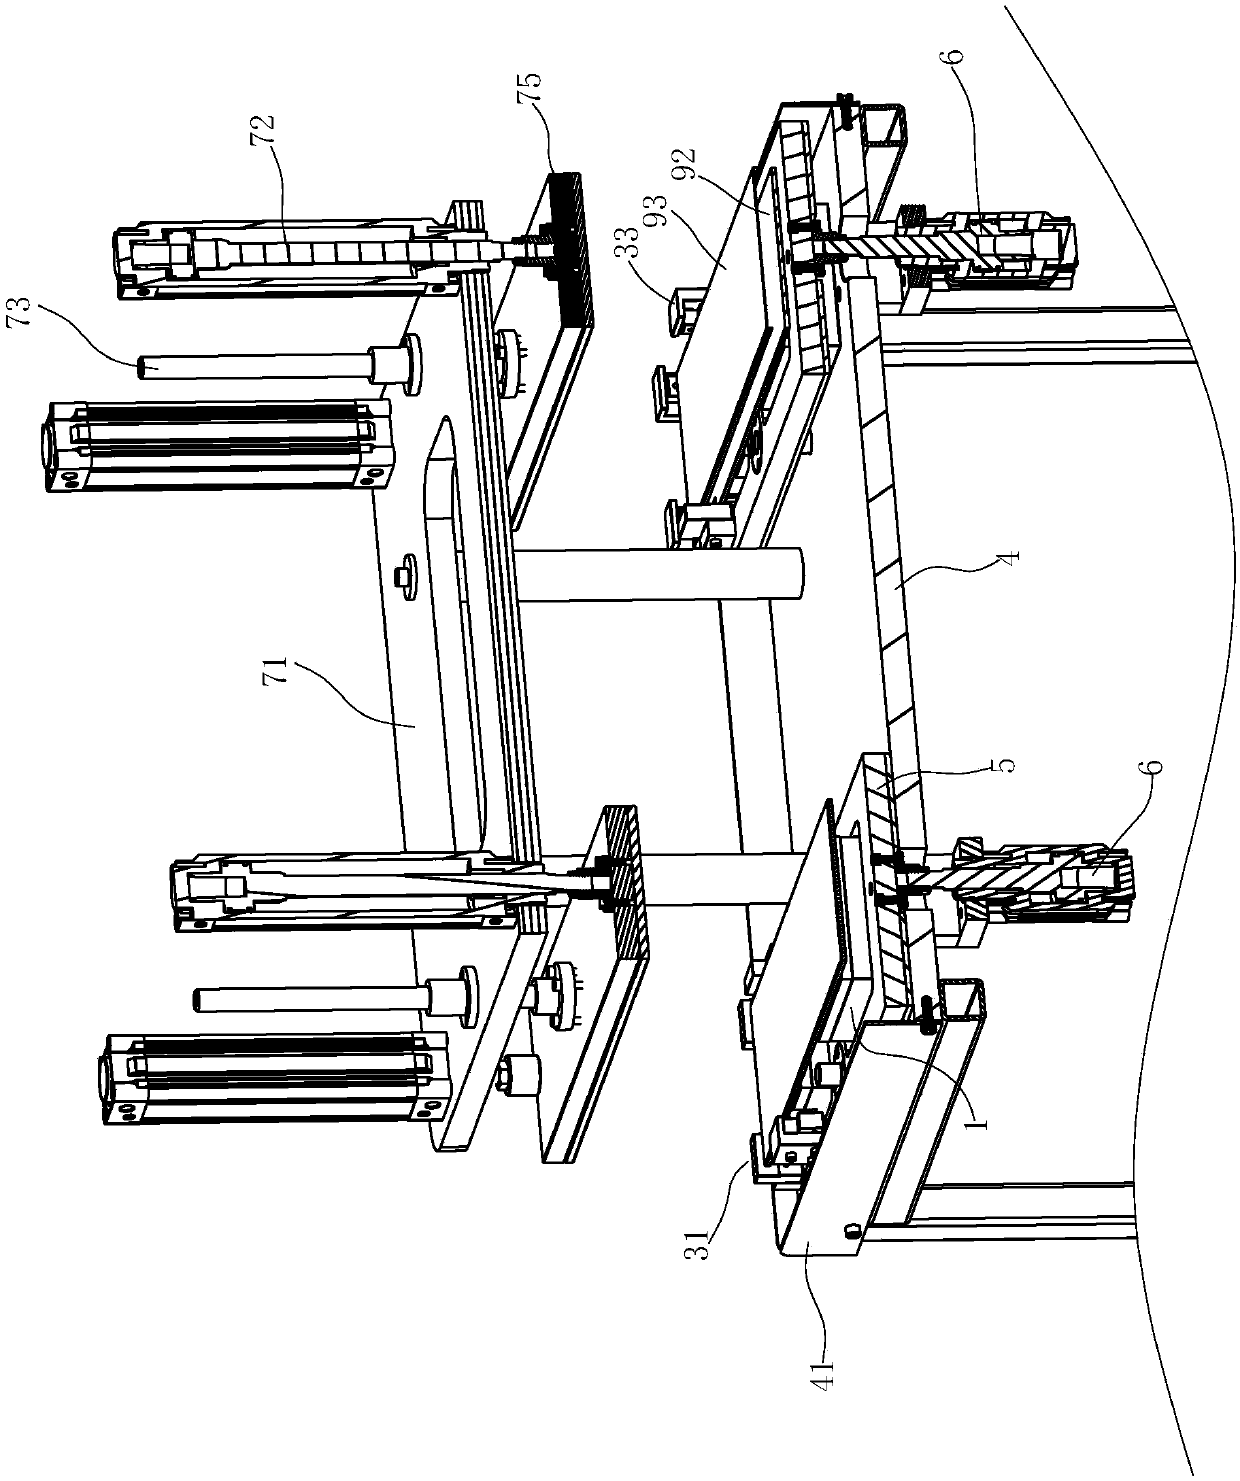 Three-workpiece simultaneous bonding tool